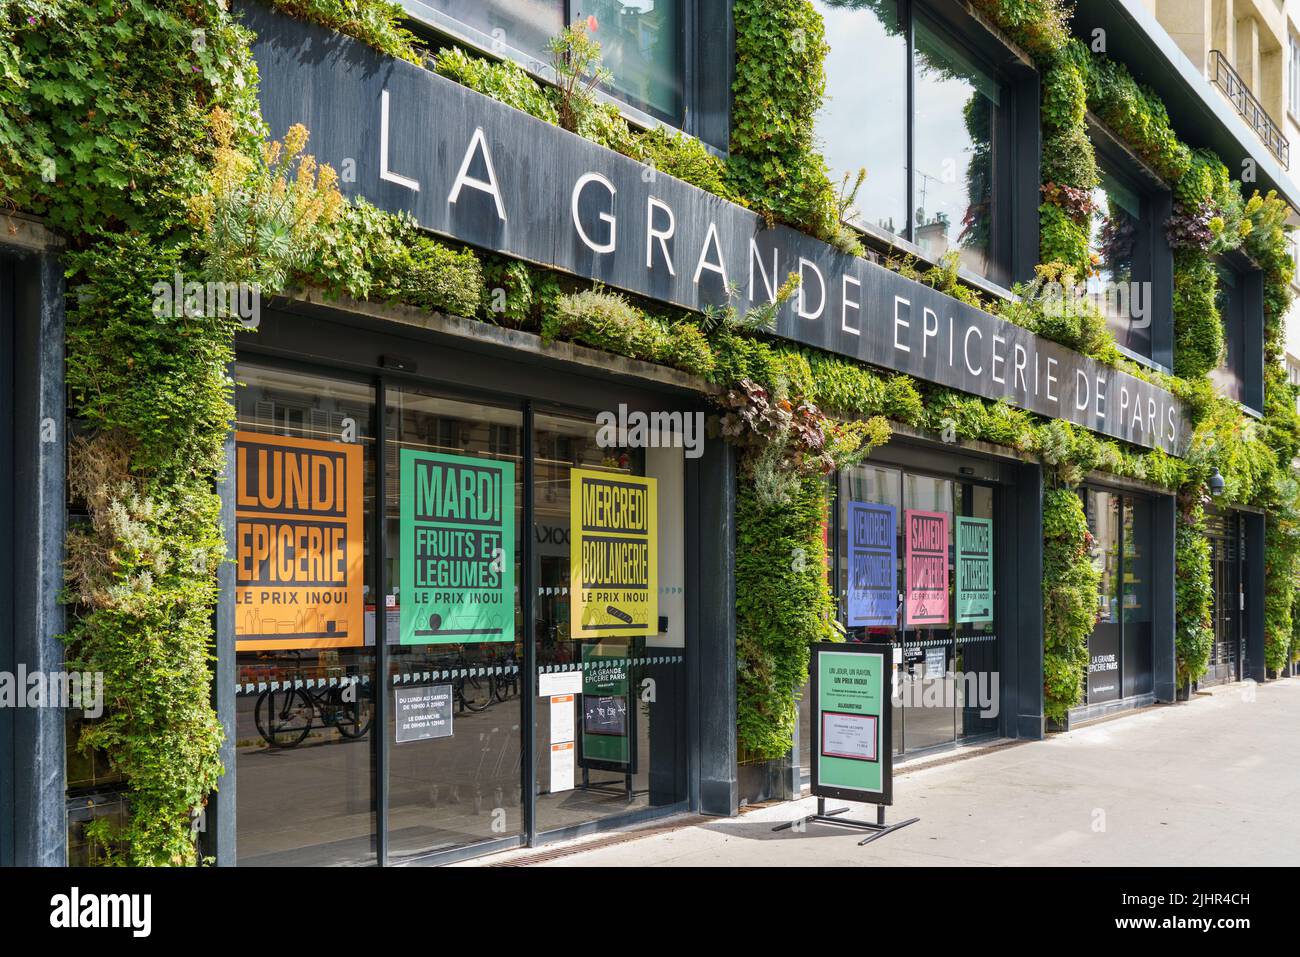 On the Road: La Grande Epicerie, Paris - Produce Blue Book